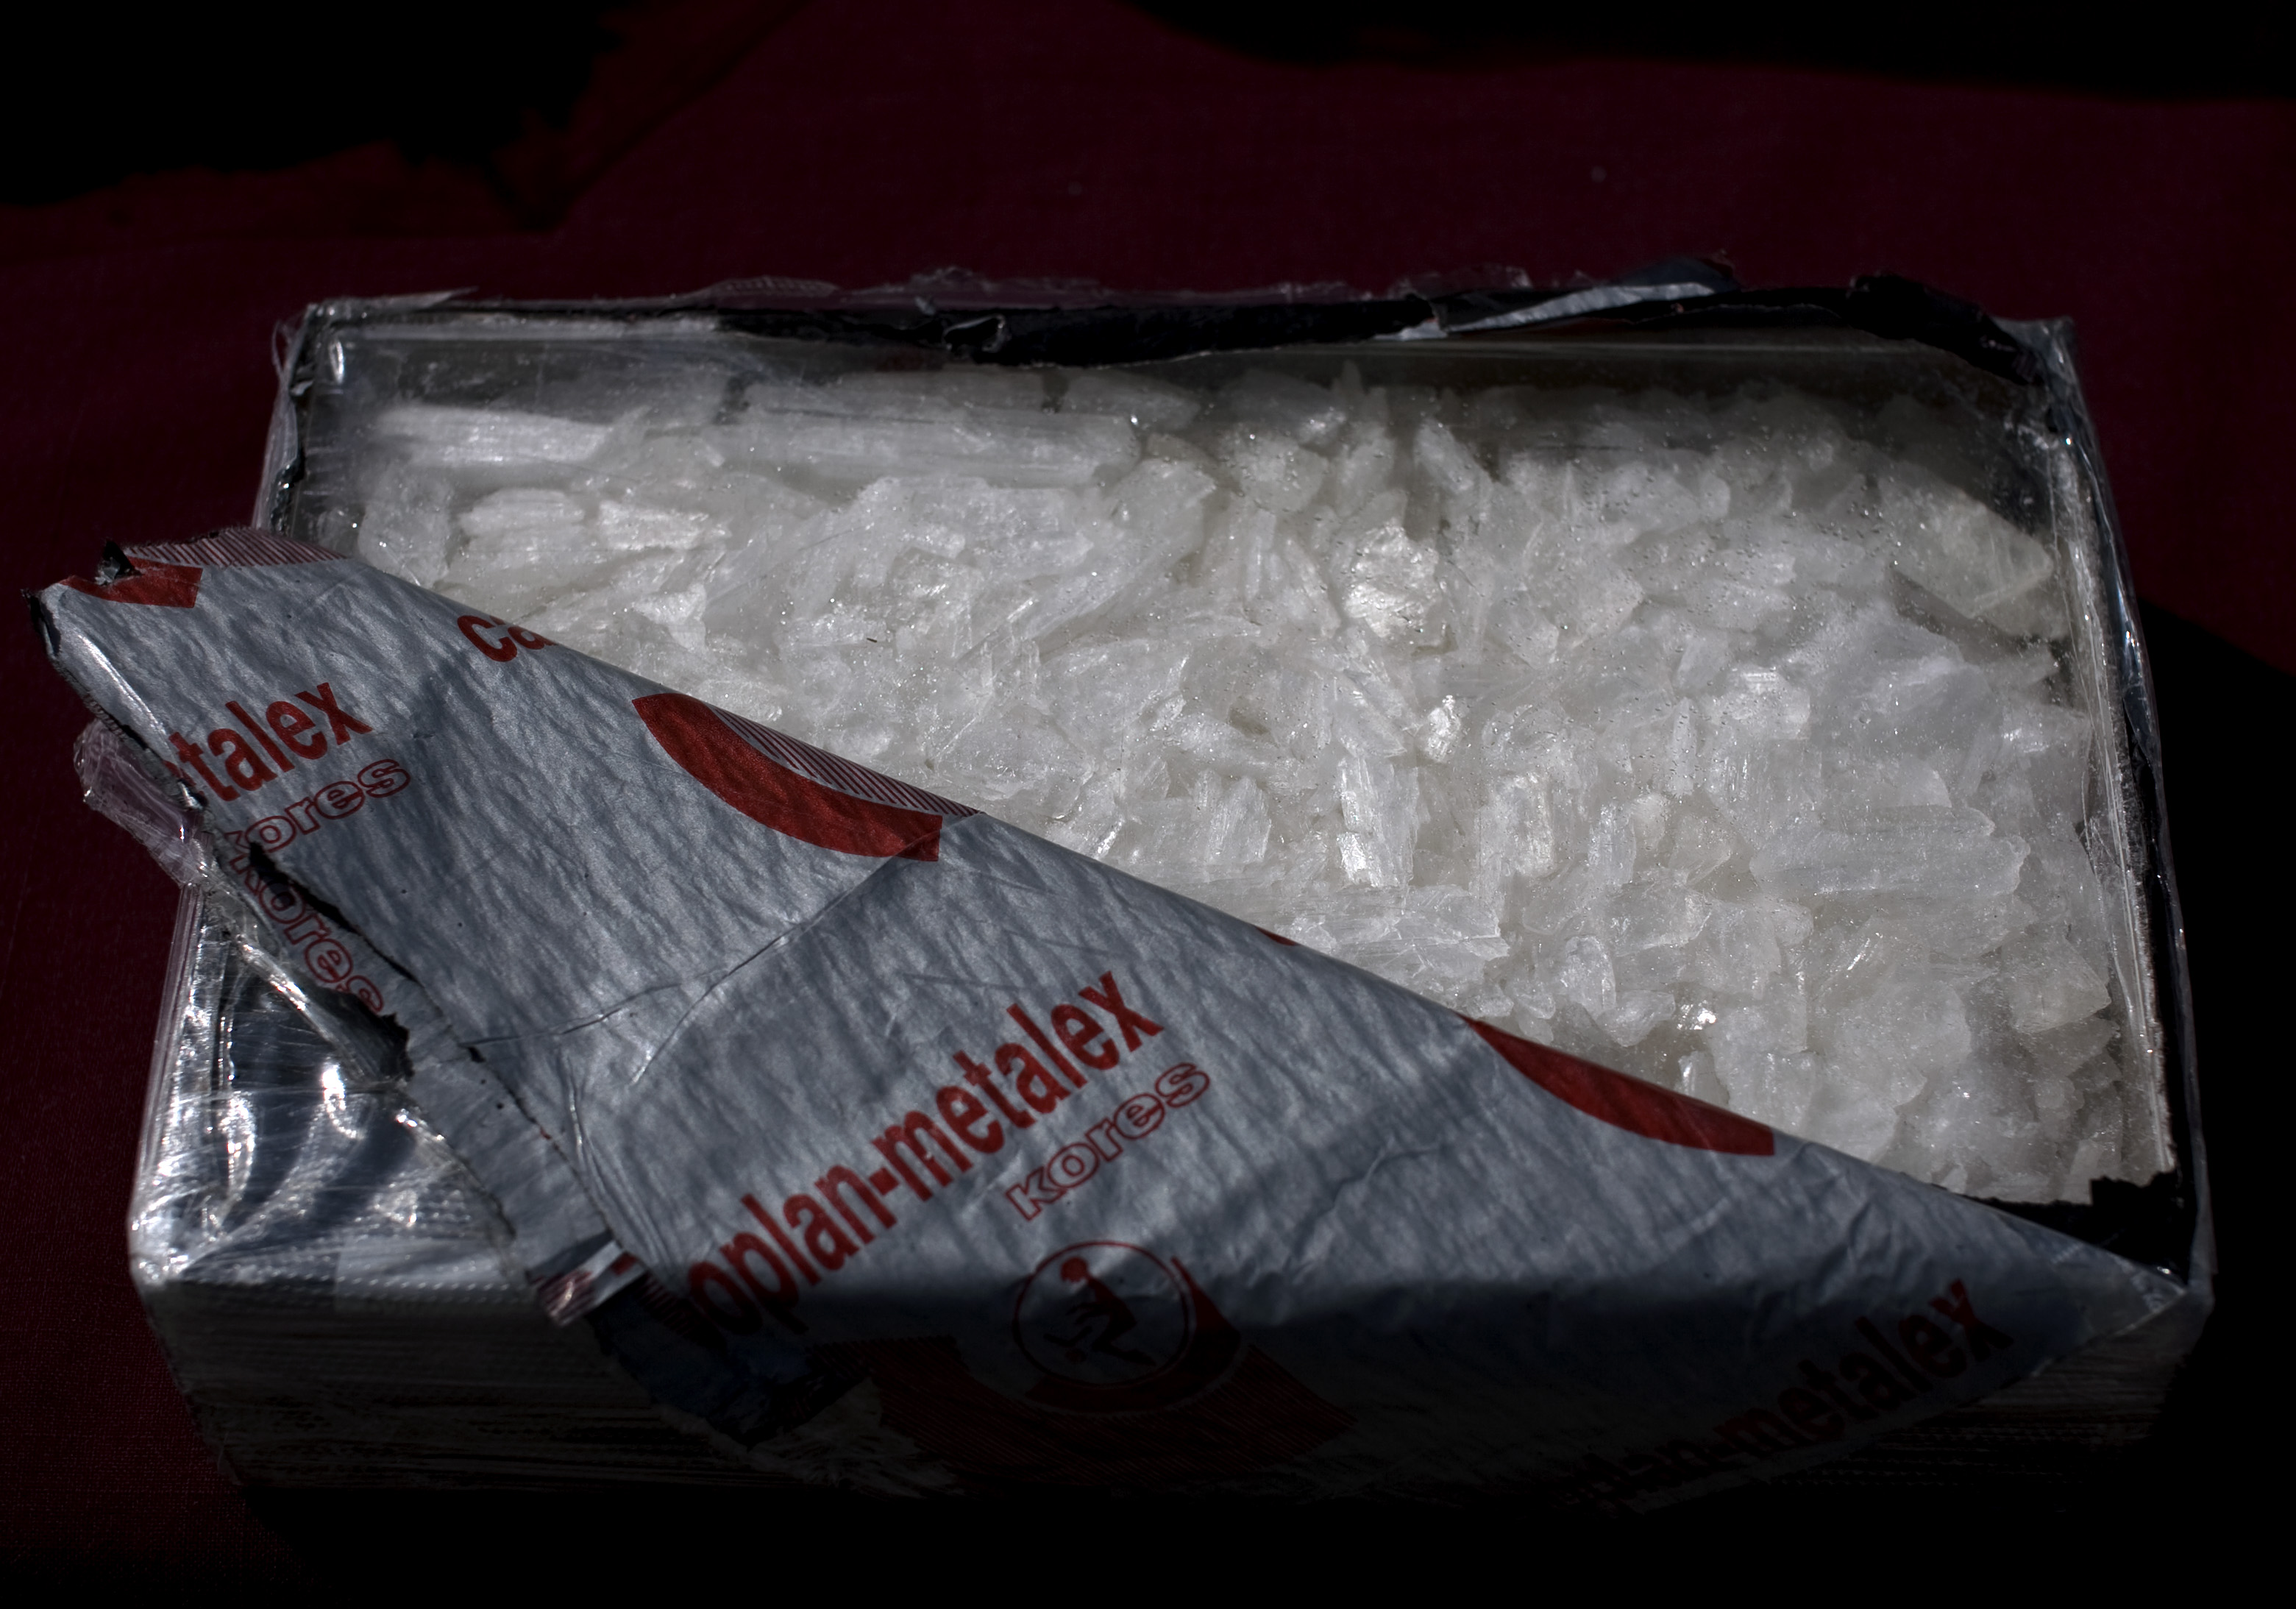 Den 26-årige svensken greps i torsdags med 4,75 gram kristalliserat metamfetamin, som i Thailand går under namnet "ya ice".